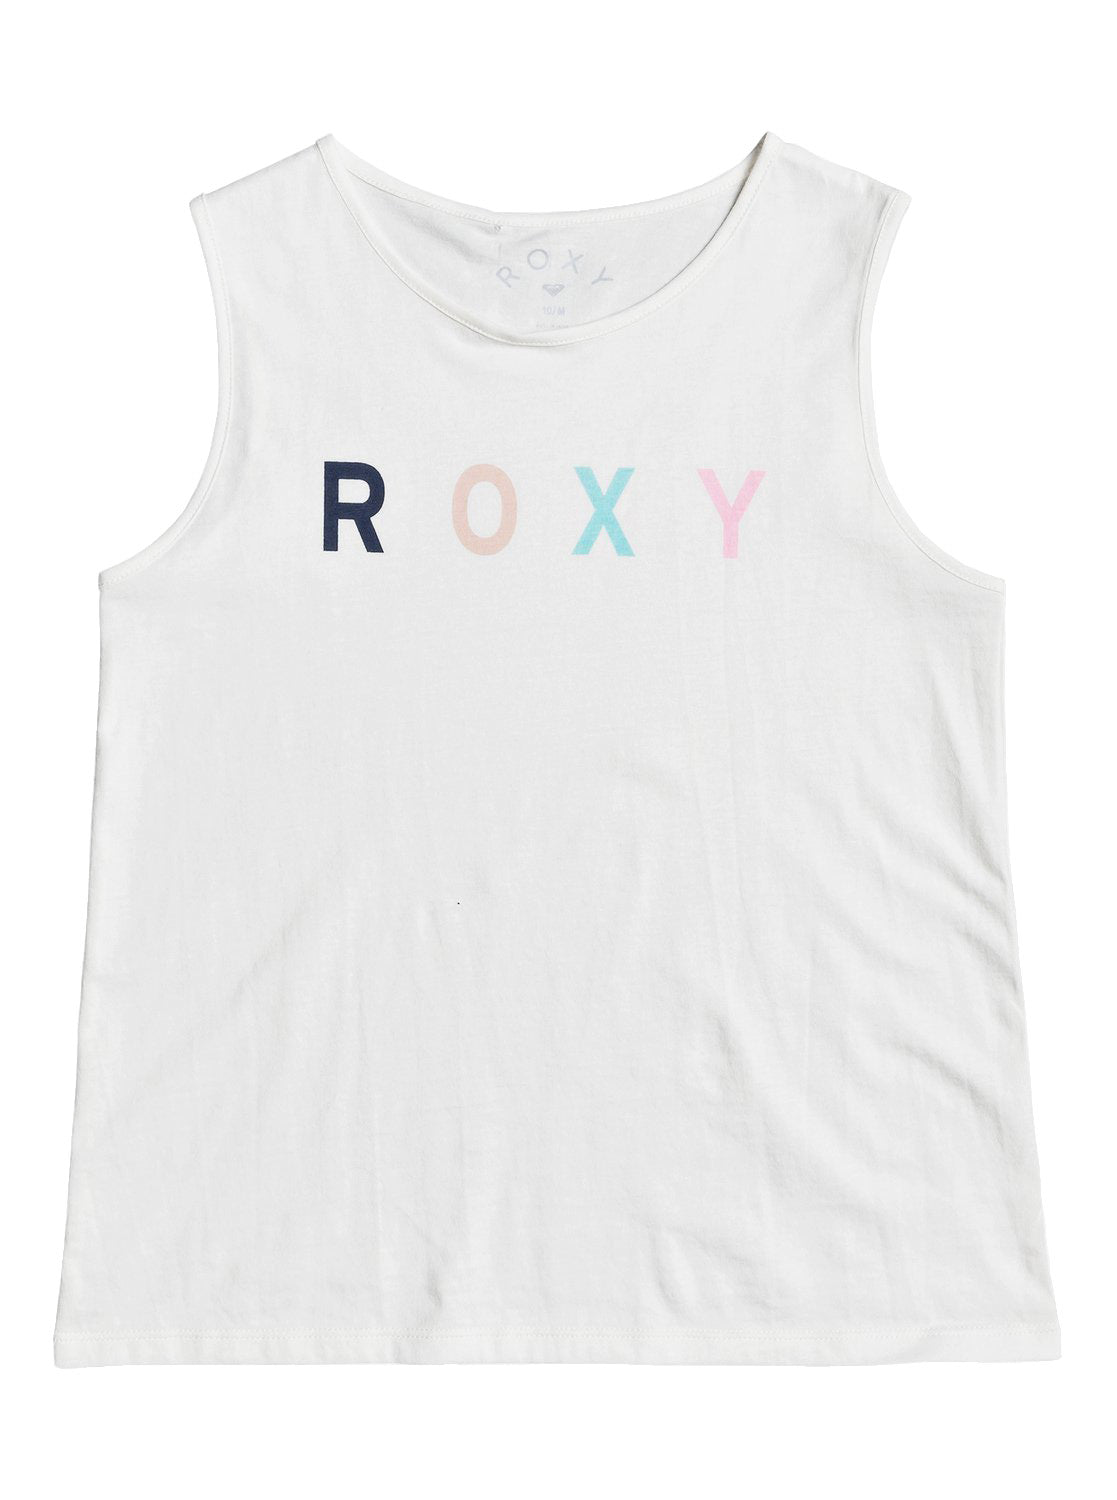 Roxy Girls All Your Love B Tank